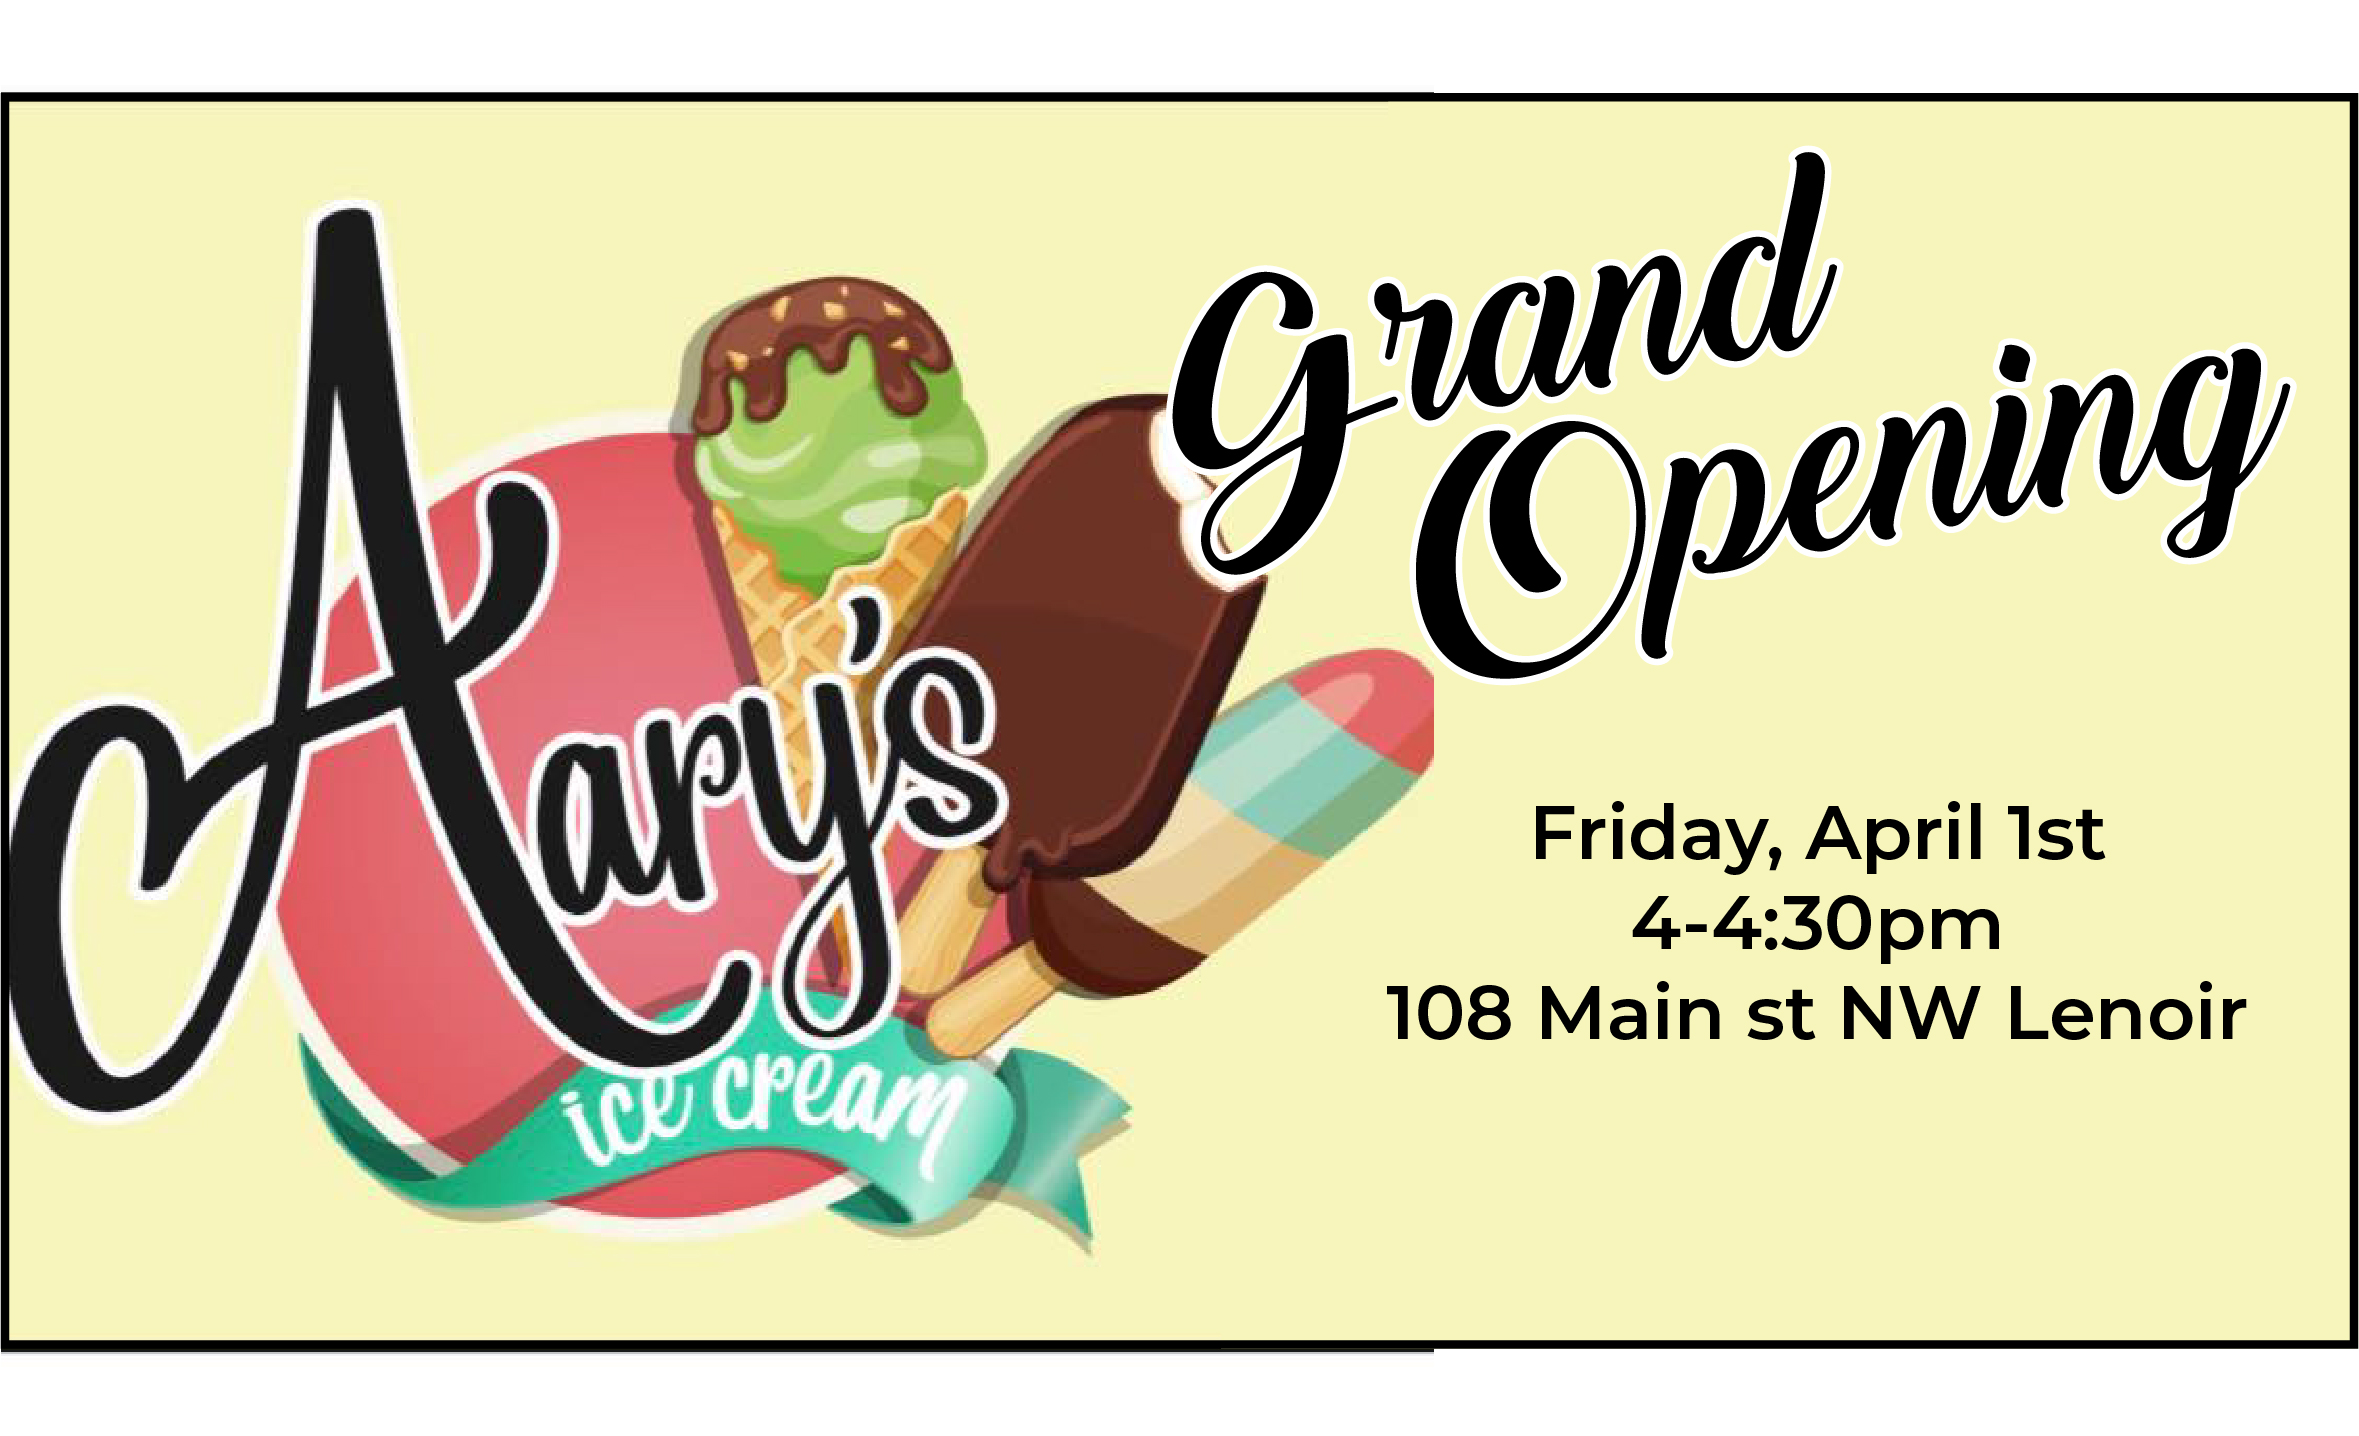 Aary’s Ice Cream Grand Opening